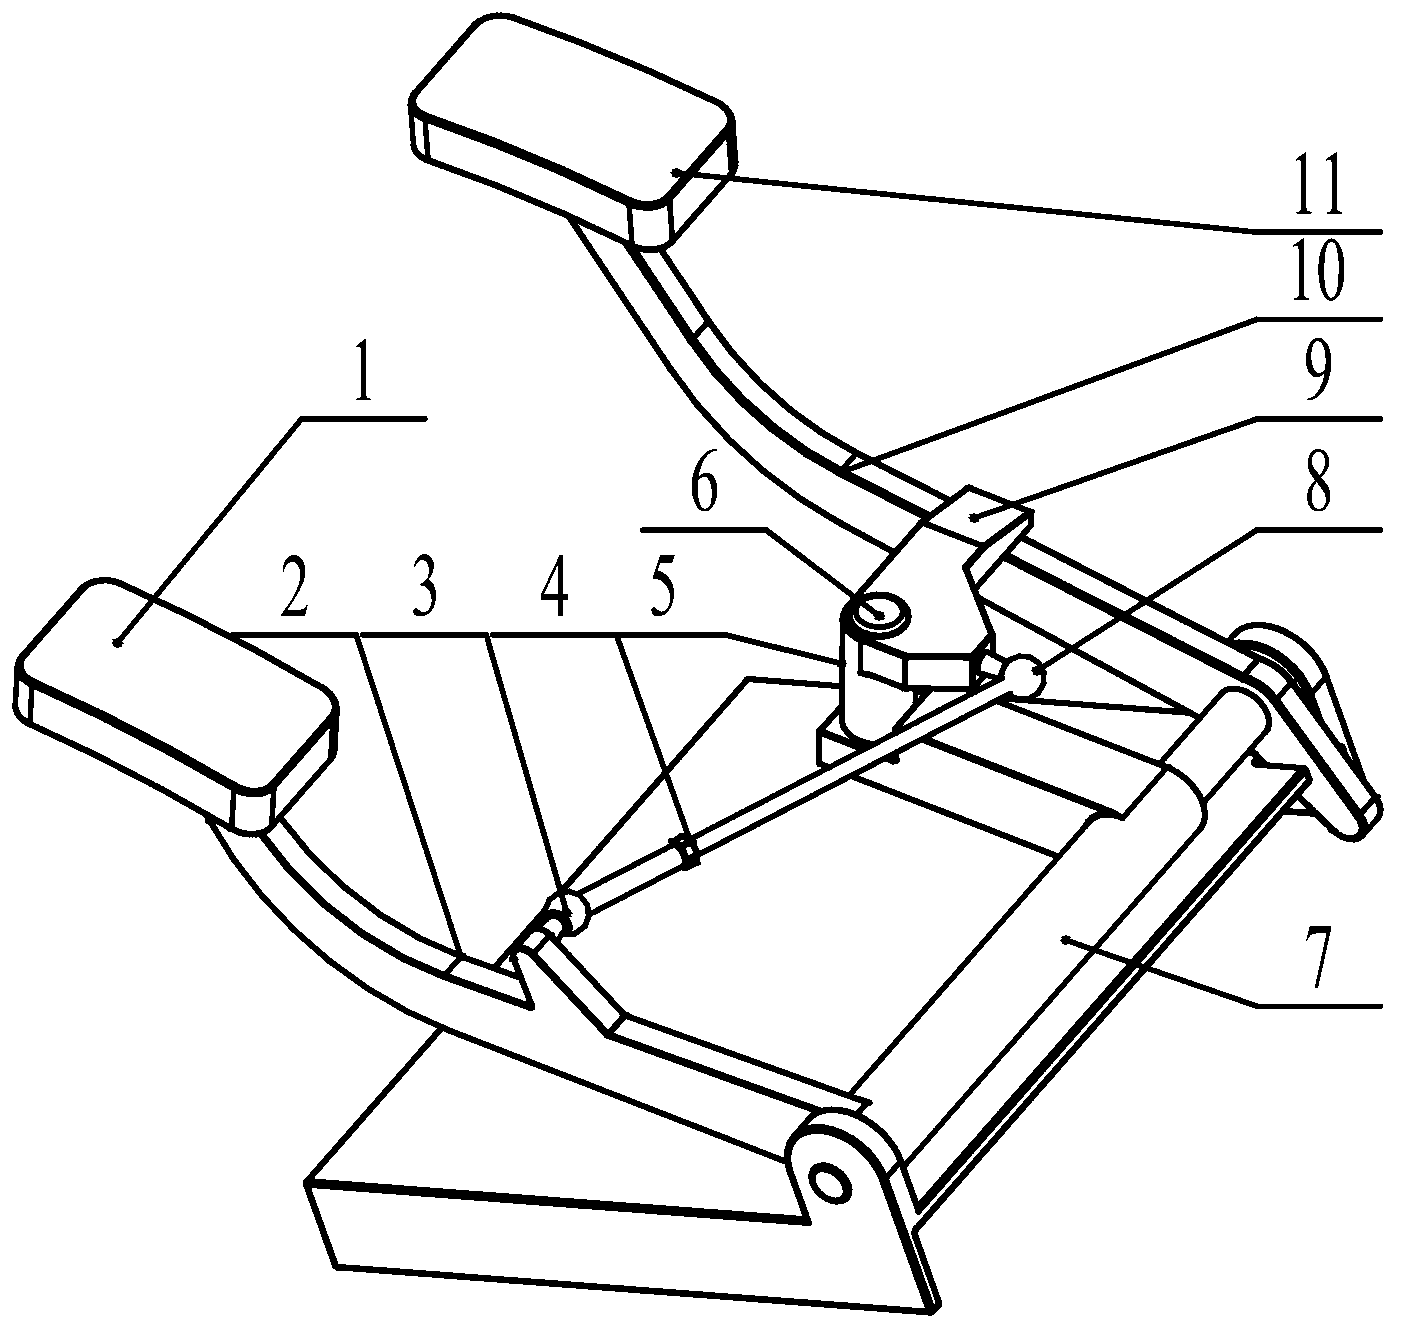 Interlocking structure of automobile braking system